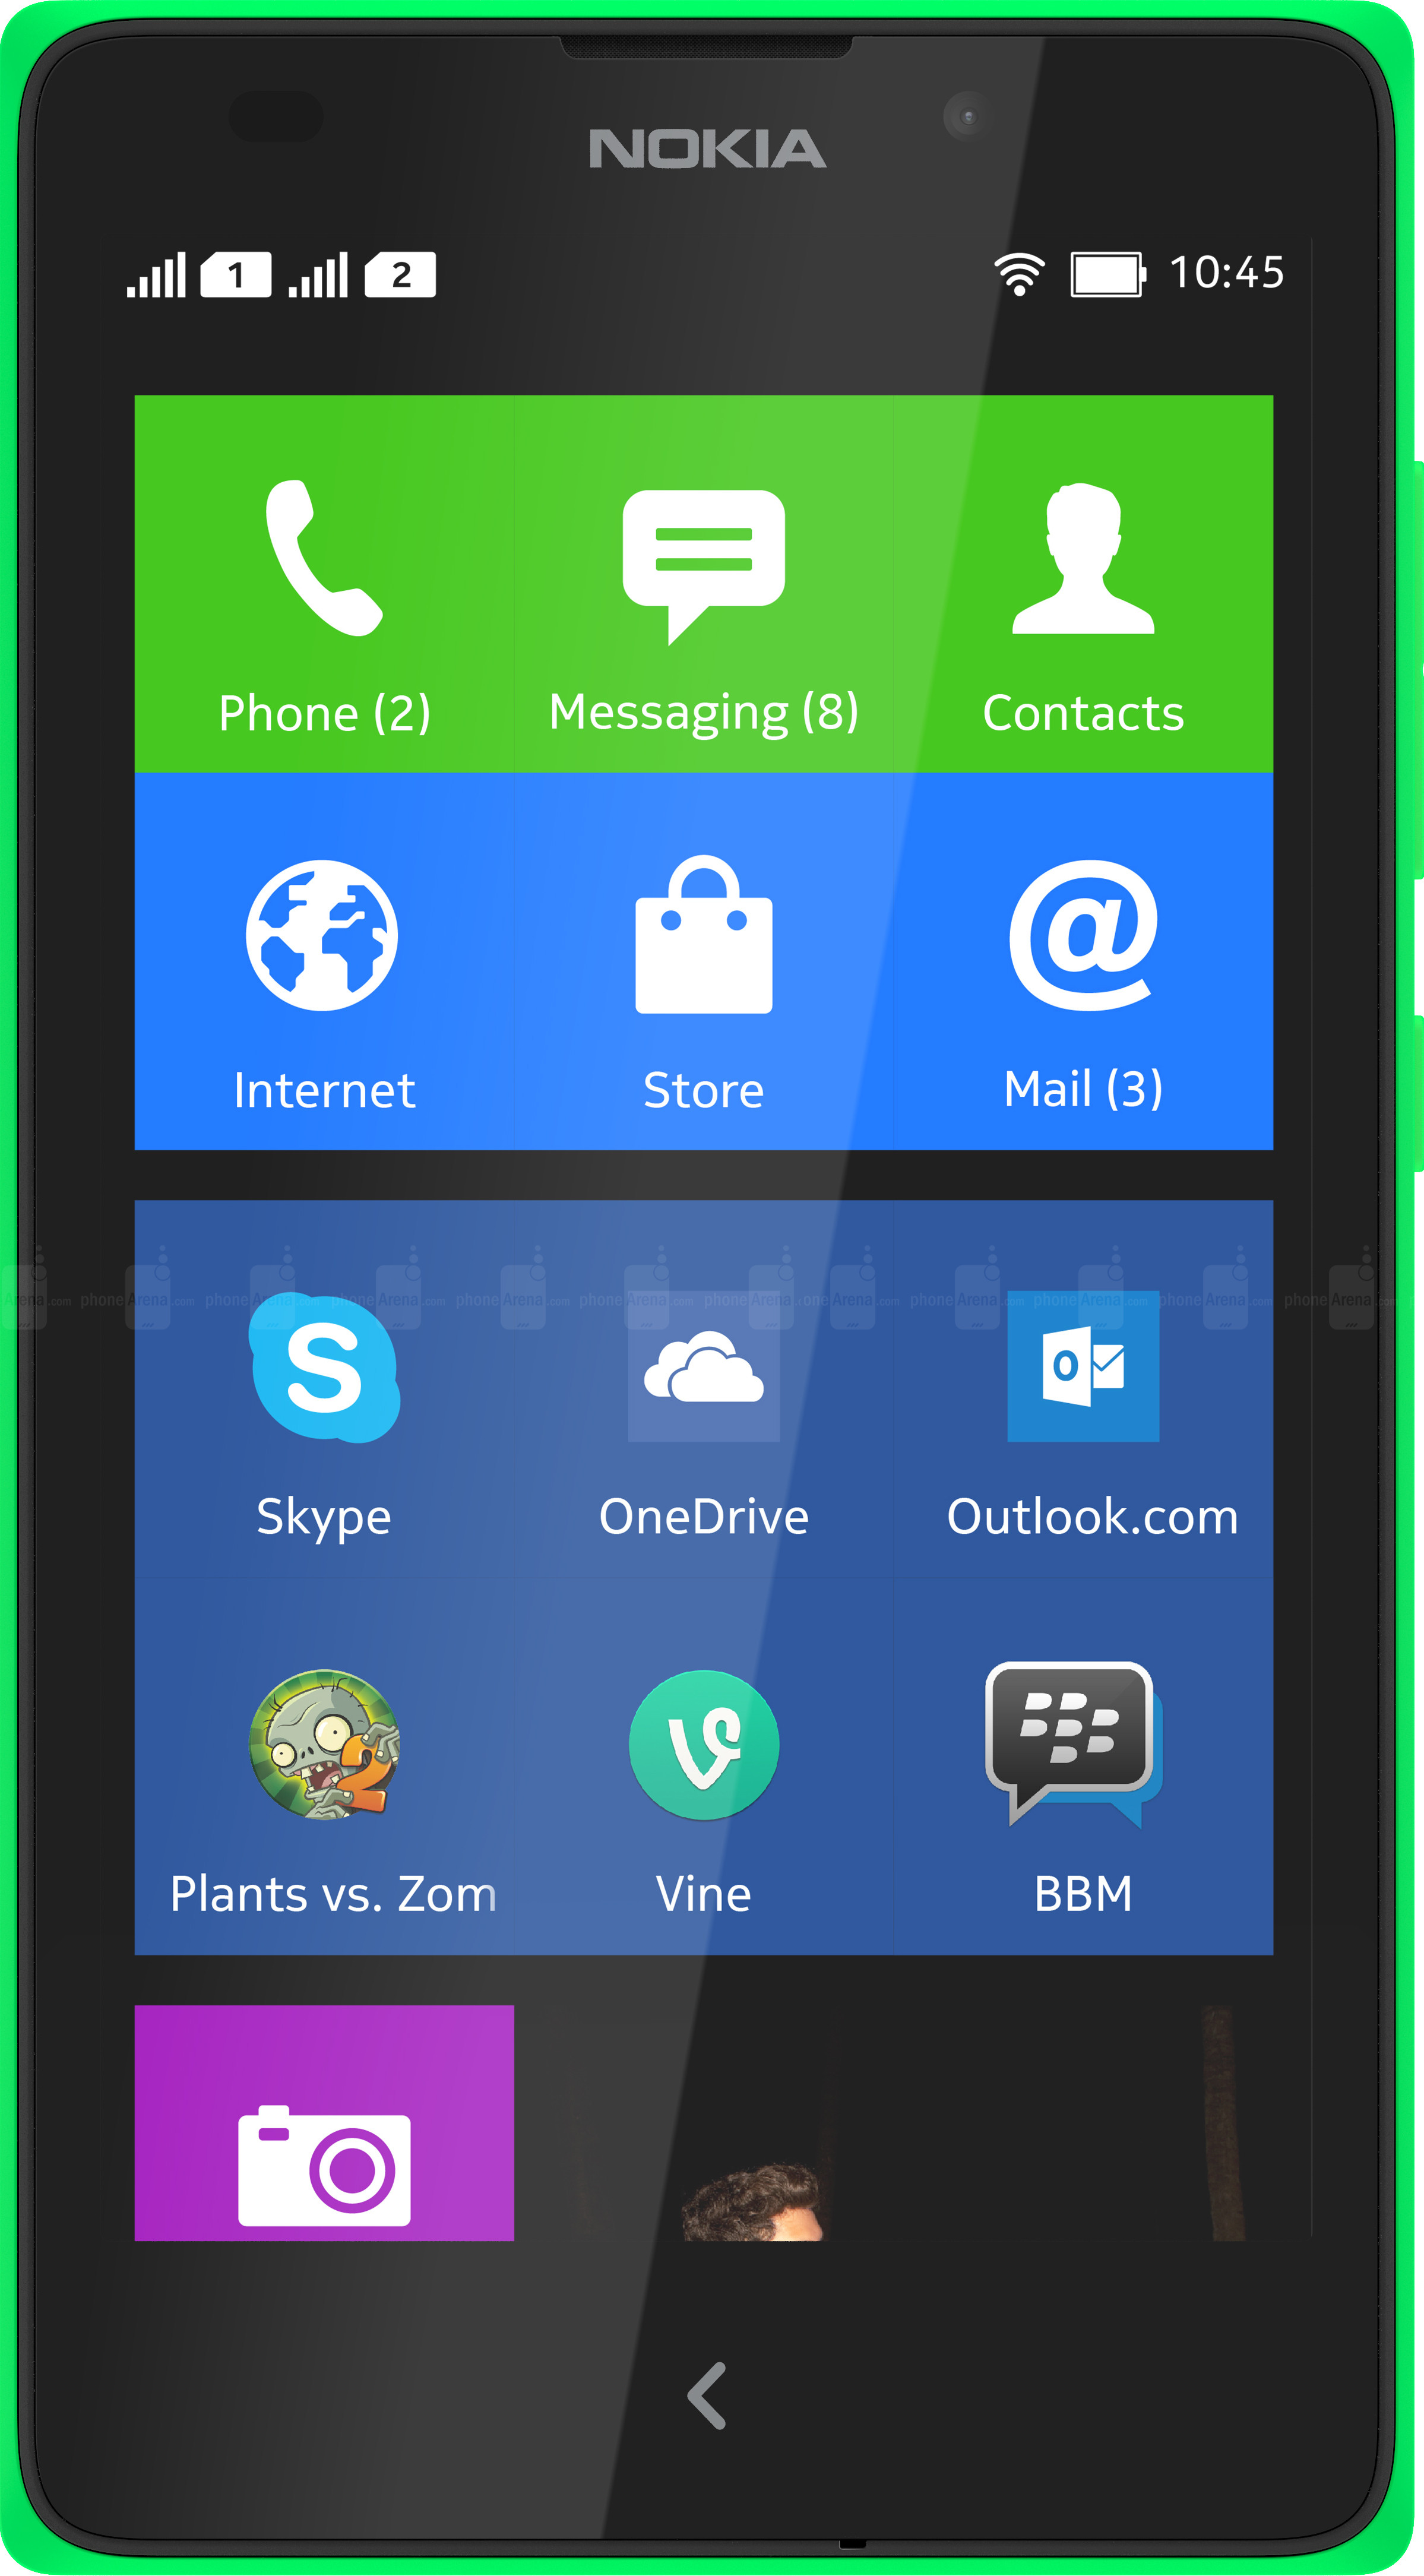 Android Nokia XL Turun Harga